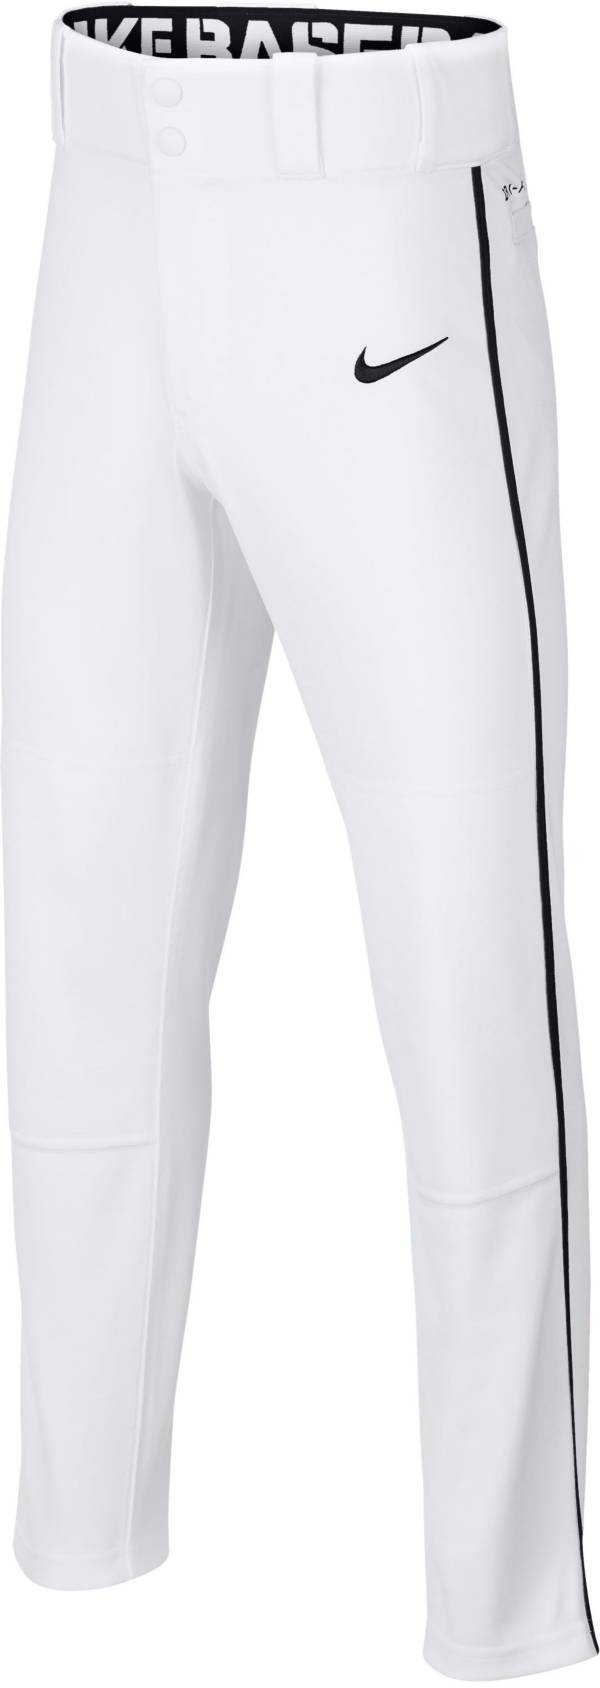 Nike White Pipe Detail Track Pants (sz. M)